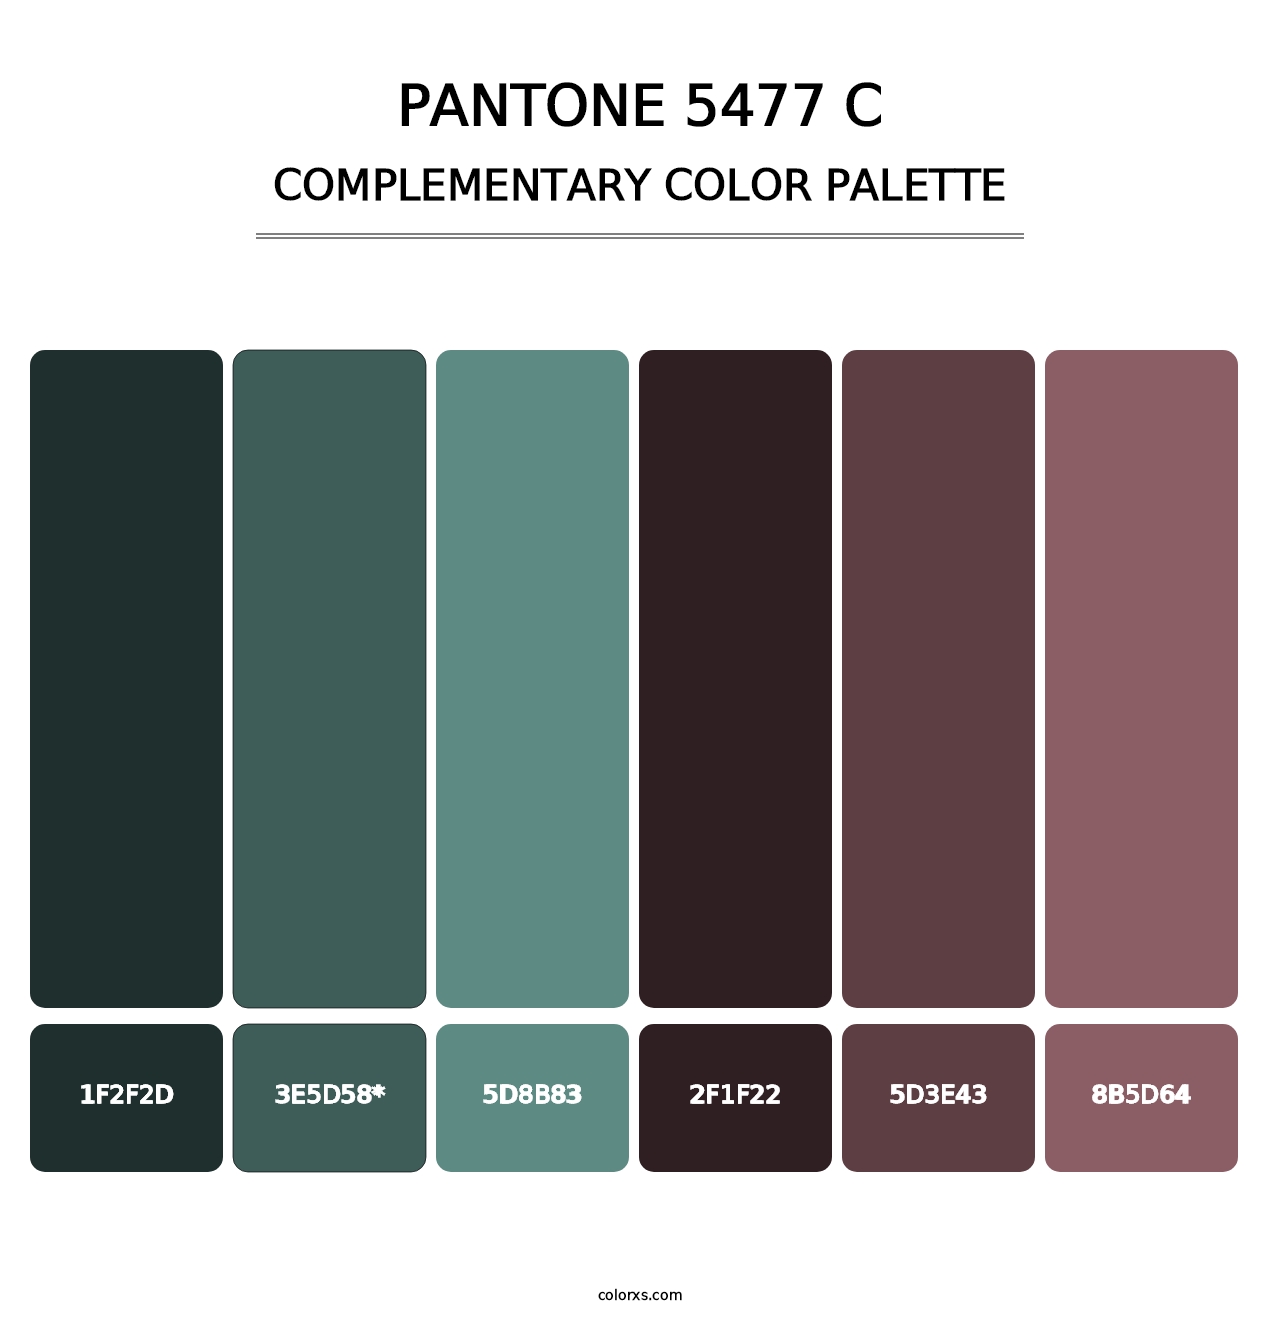 PANTONE 5477 C - Complementary Color Palette